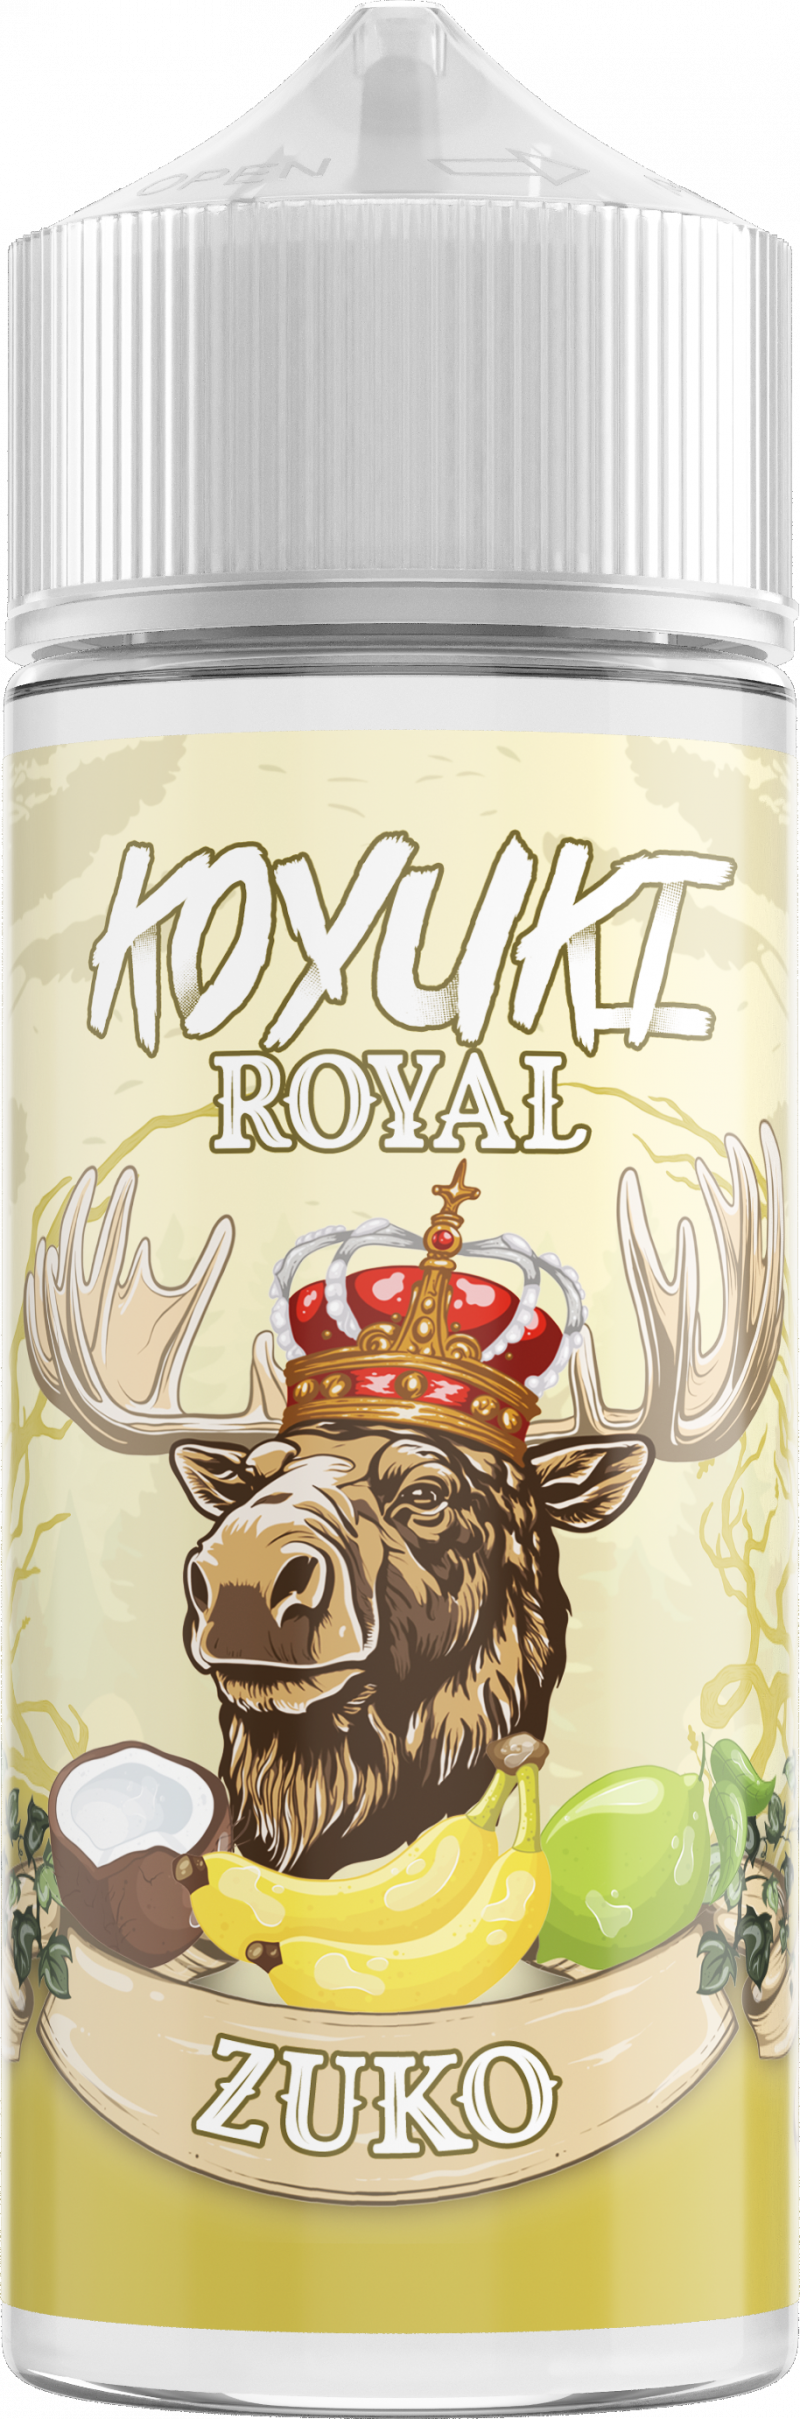 Koyuki Royal - Zuko (100 ml, Shortfill)